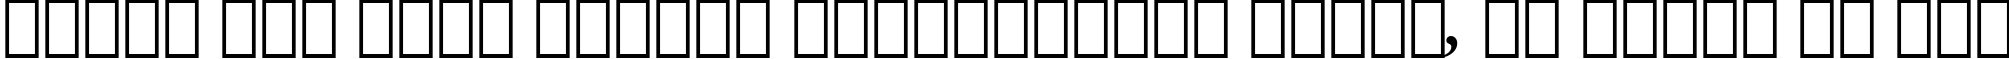 Пример написания шрифтом Galliard Bold Italic BT текста на русском